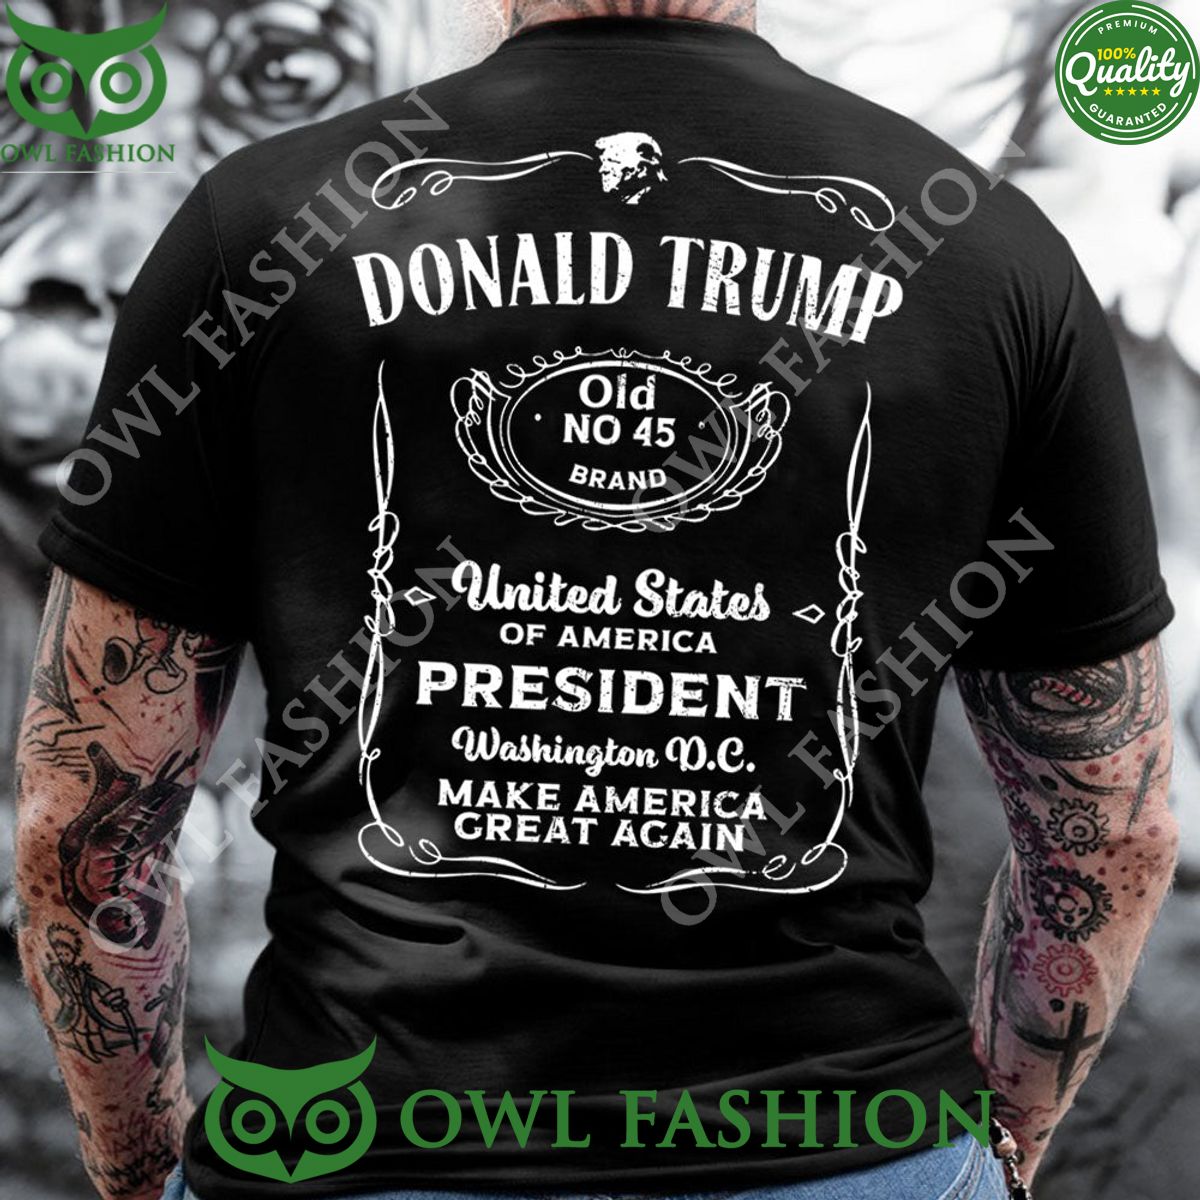 donald trump old no 45 brand america president make america great again 2d t shirt 1 7edq7.jpg